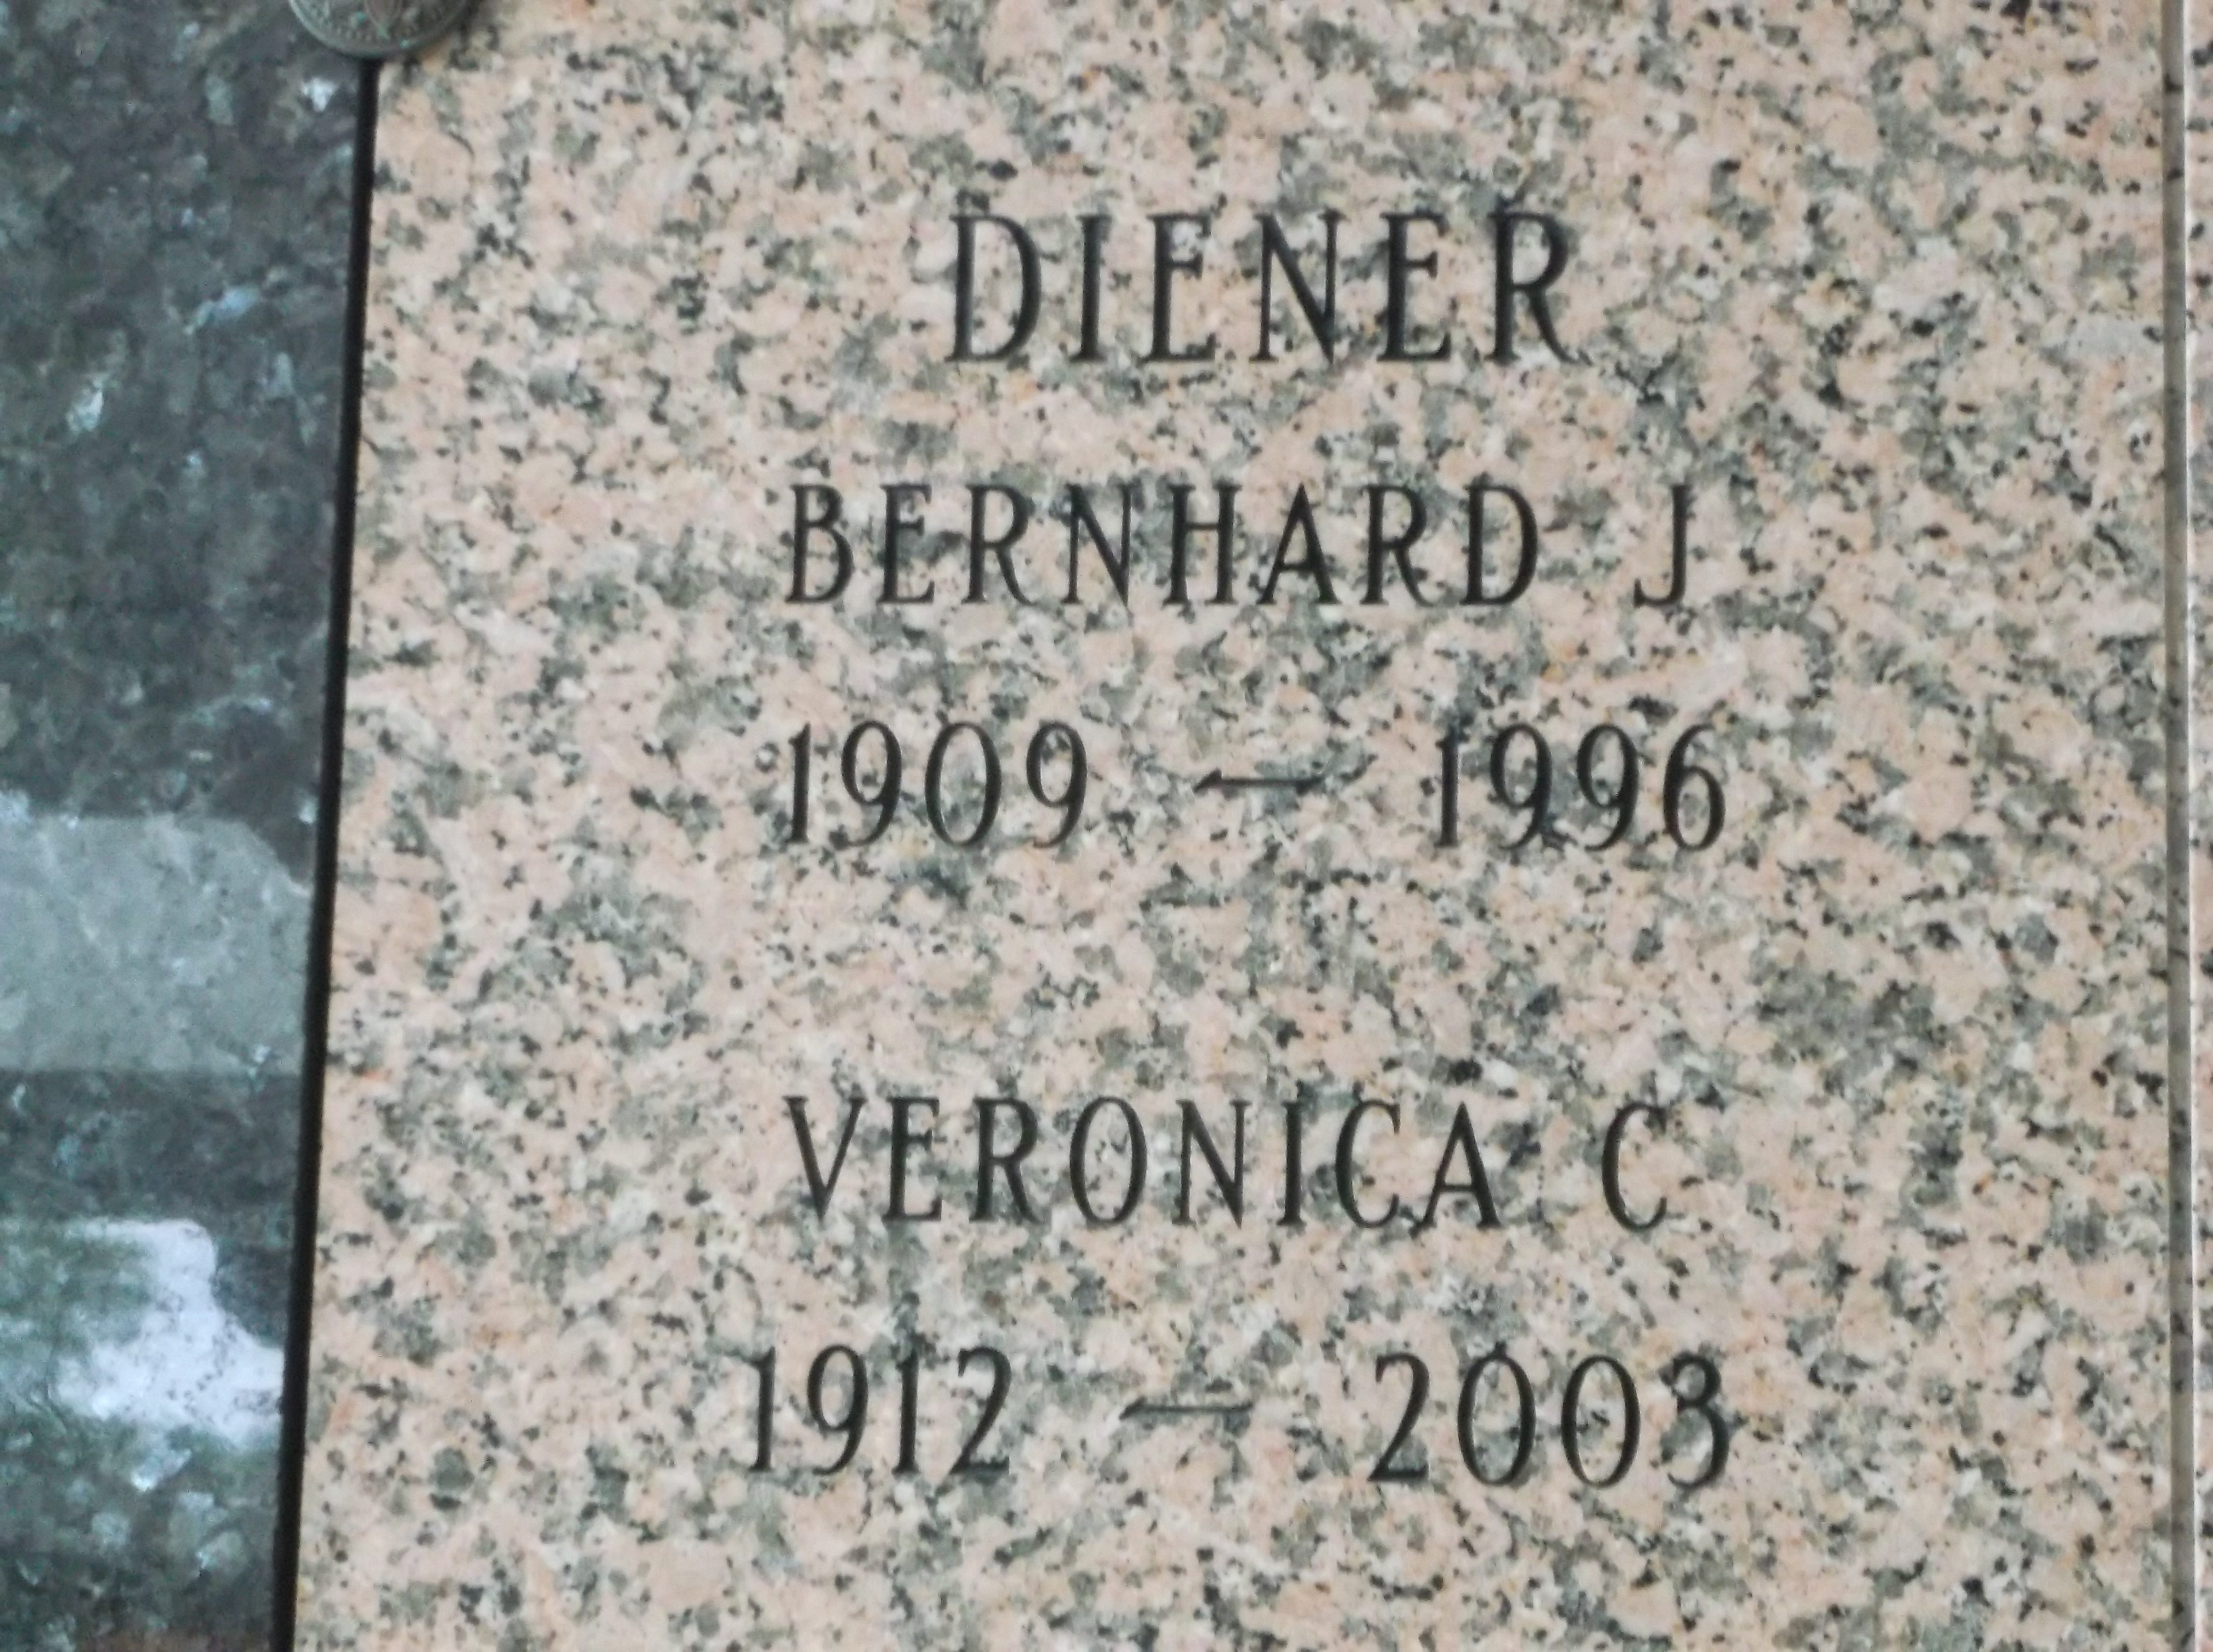 Veronica C Diener